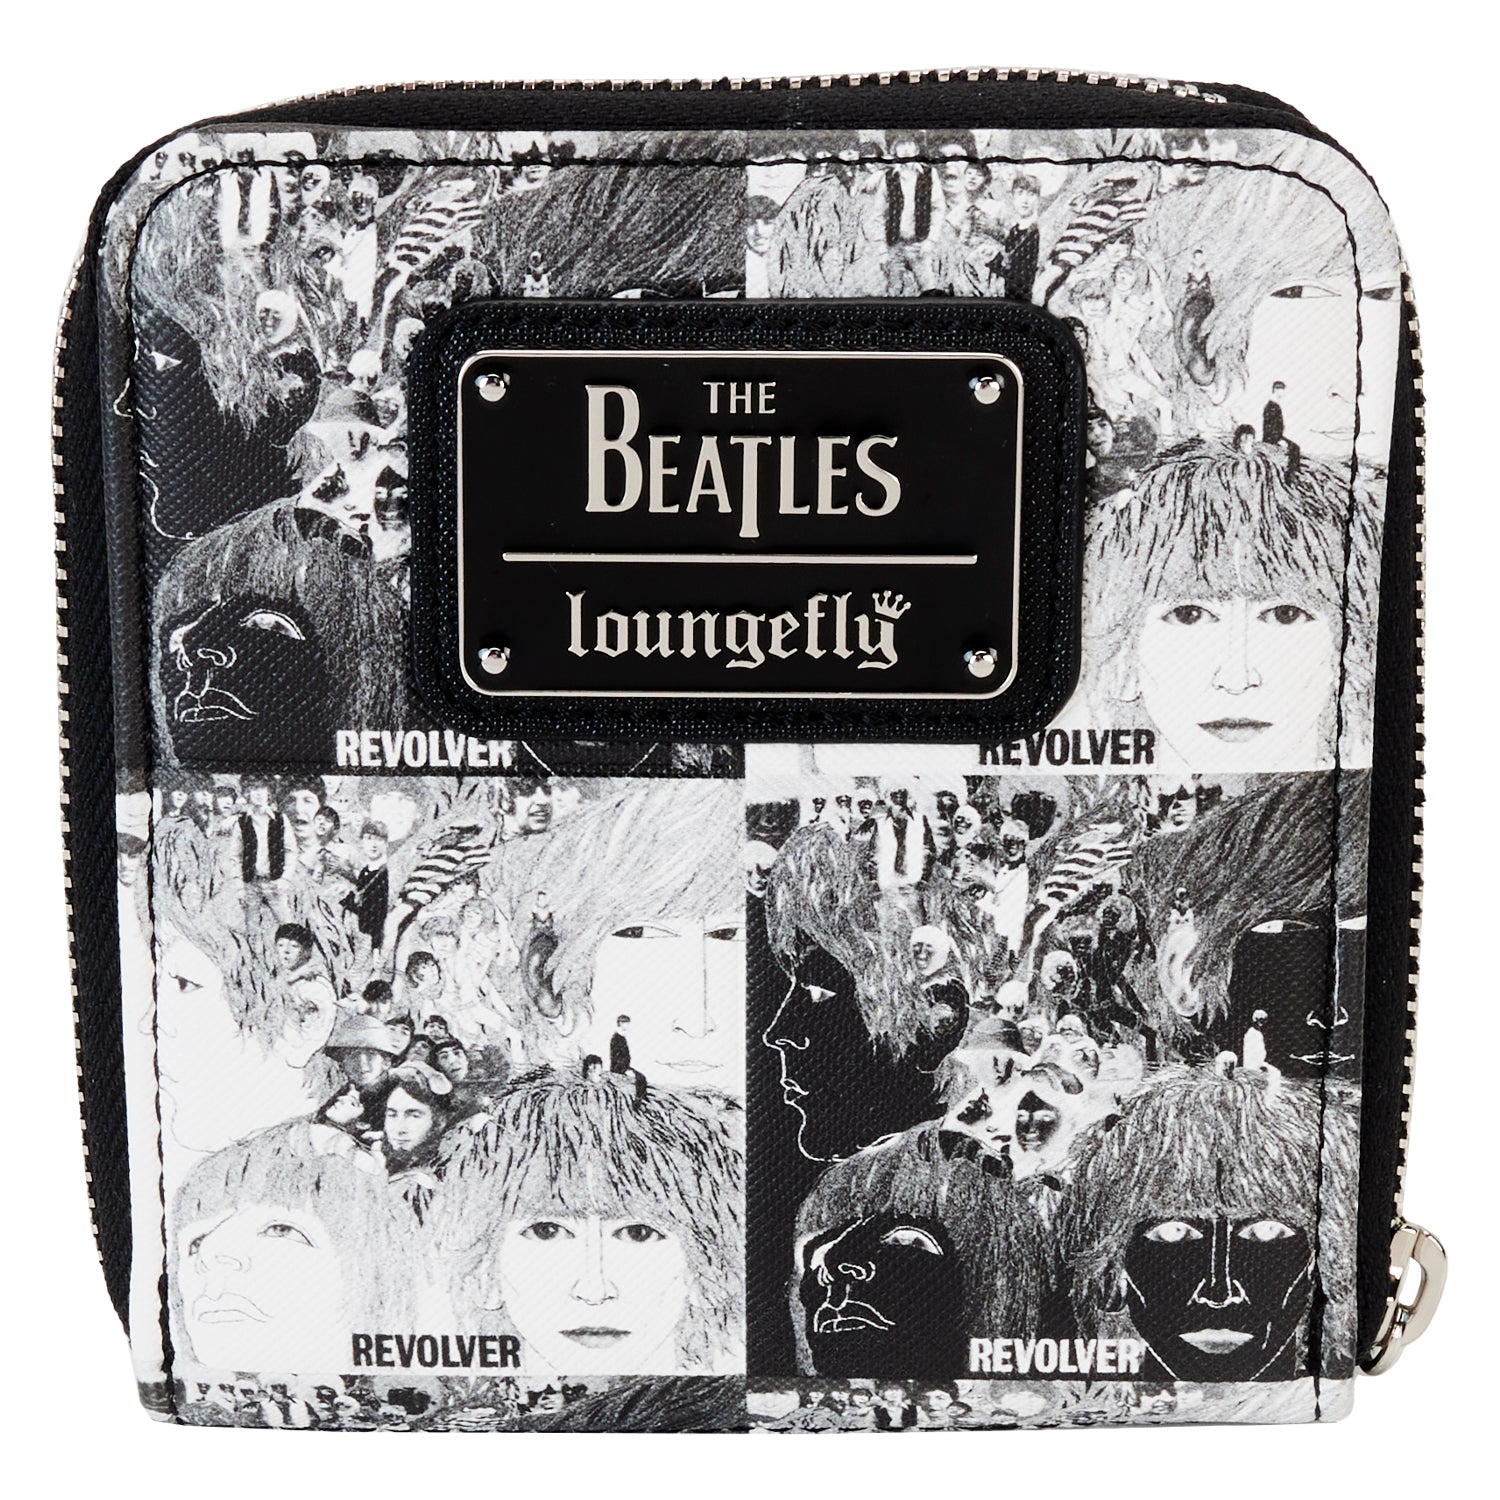 Loungefly The Beatles Revolver Album Zip Around Wallet